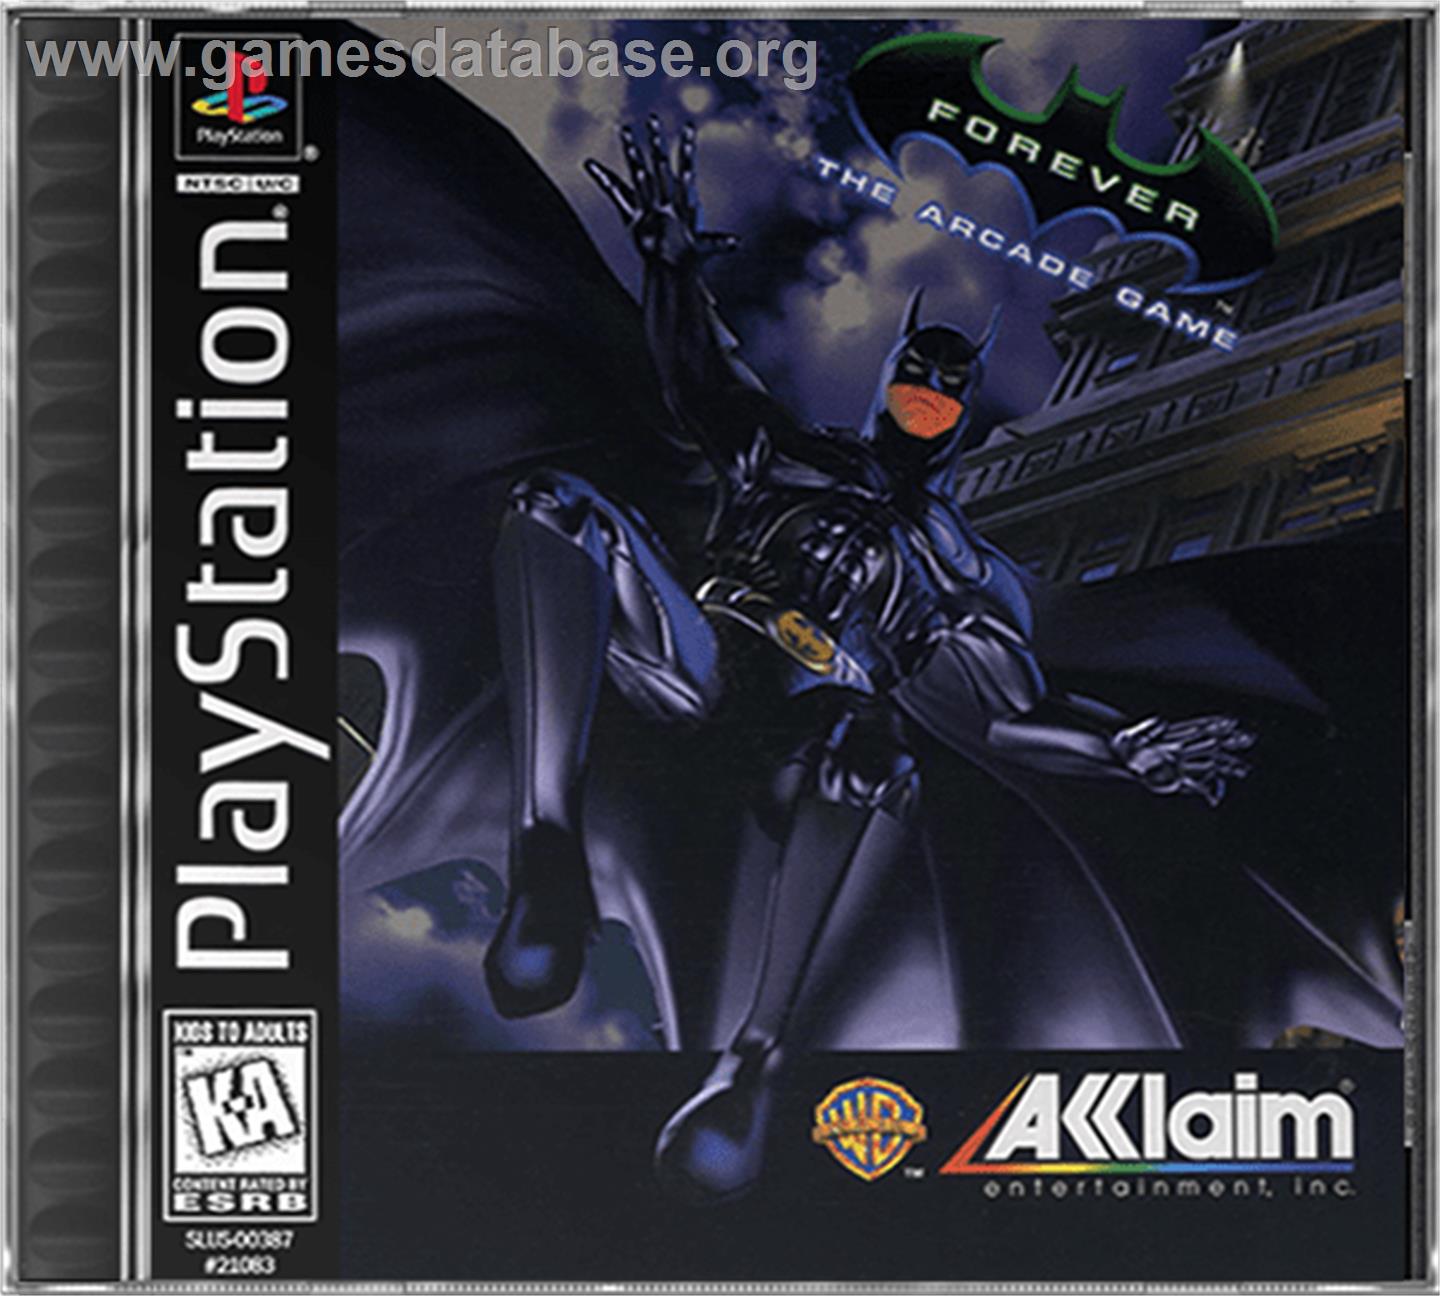 Batman Forever: The Arcade Game - Sony Playstation - Artwork - Box